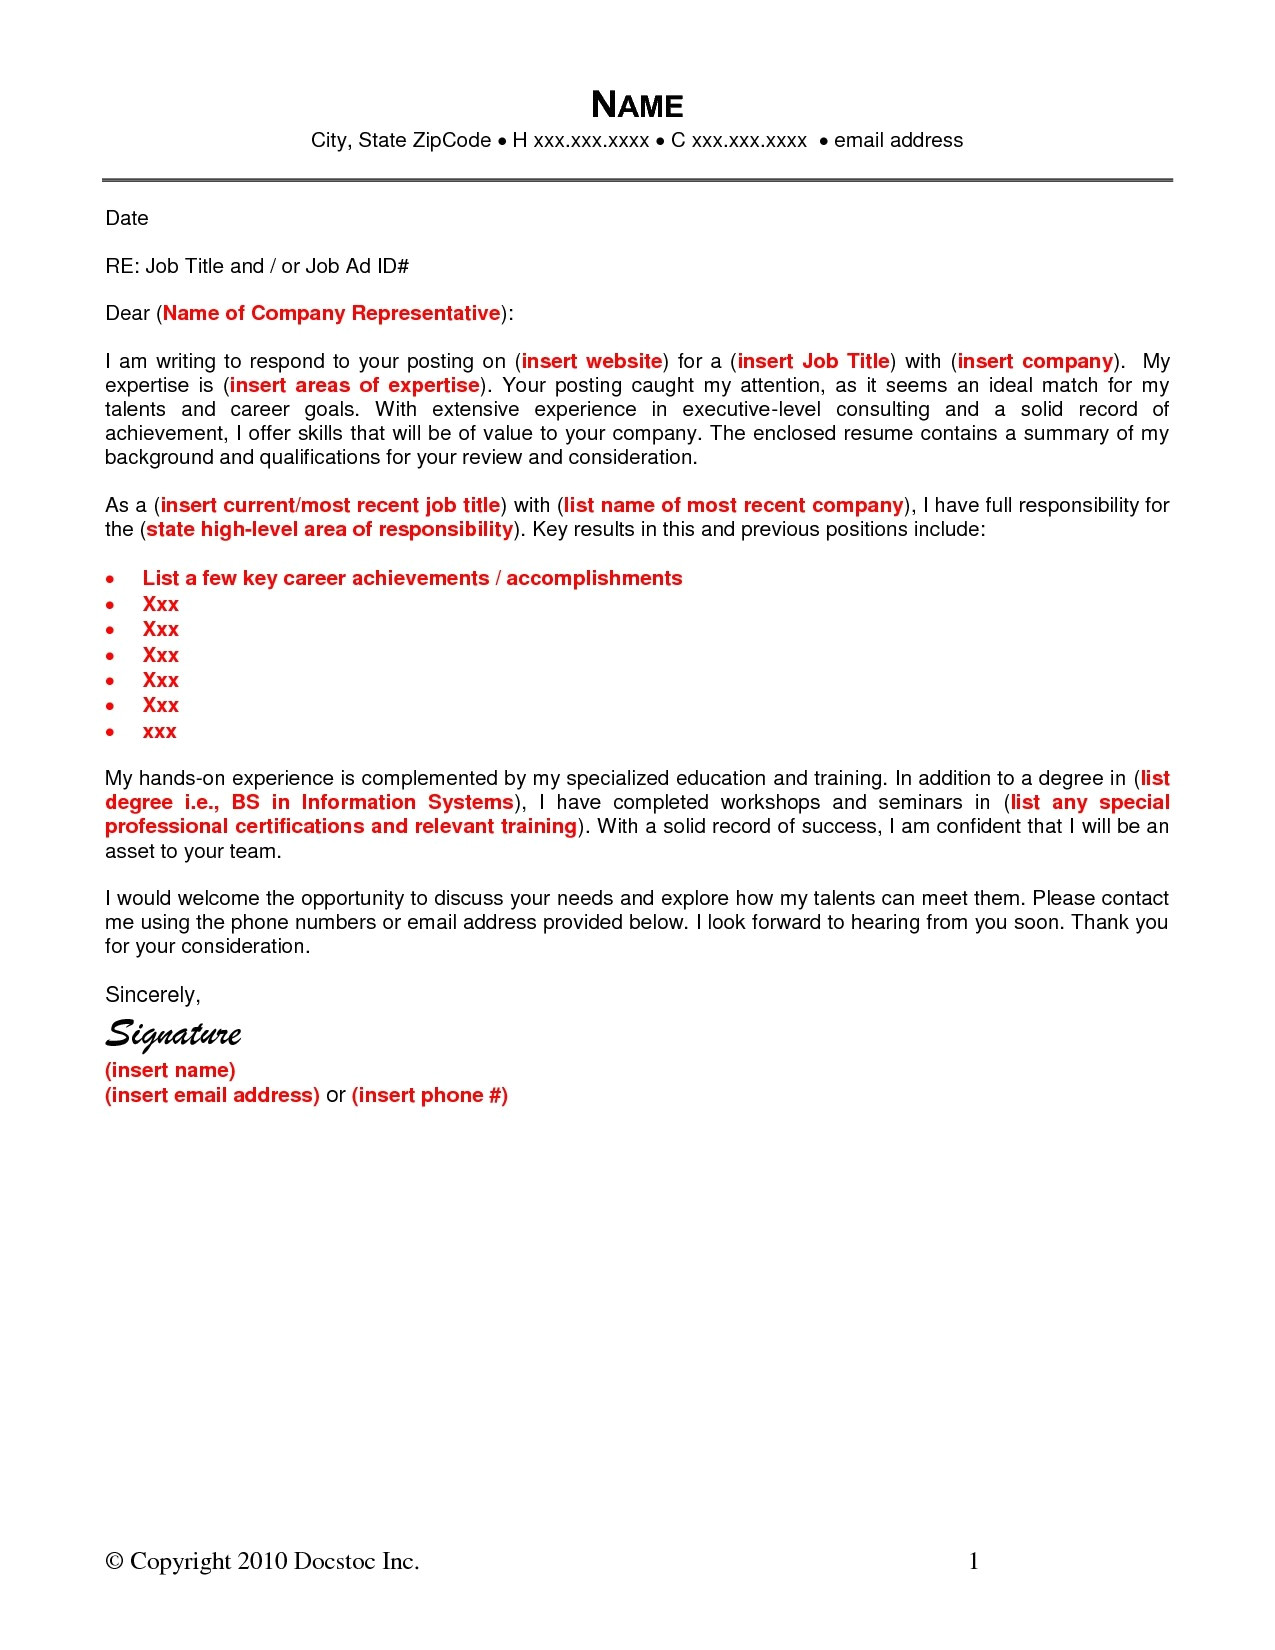 resume cover letter via email sample